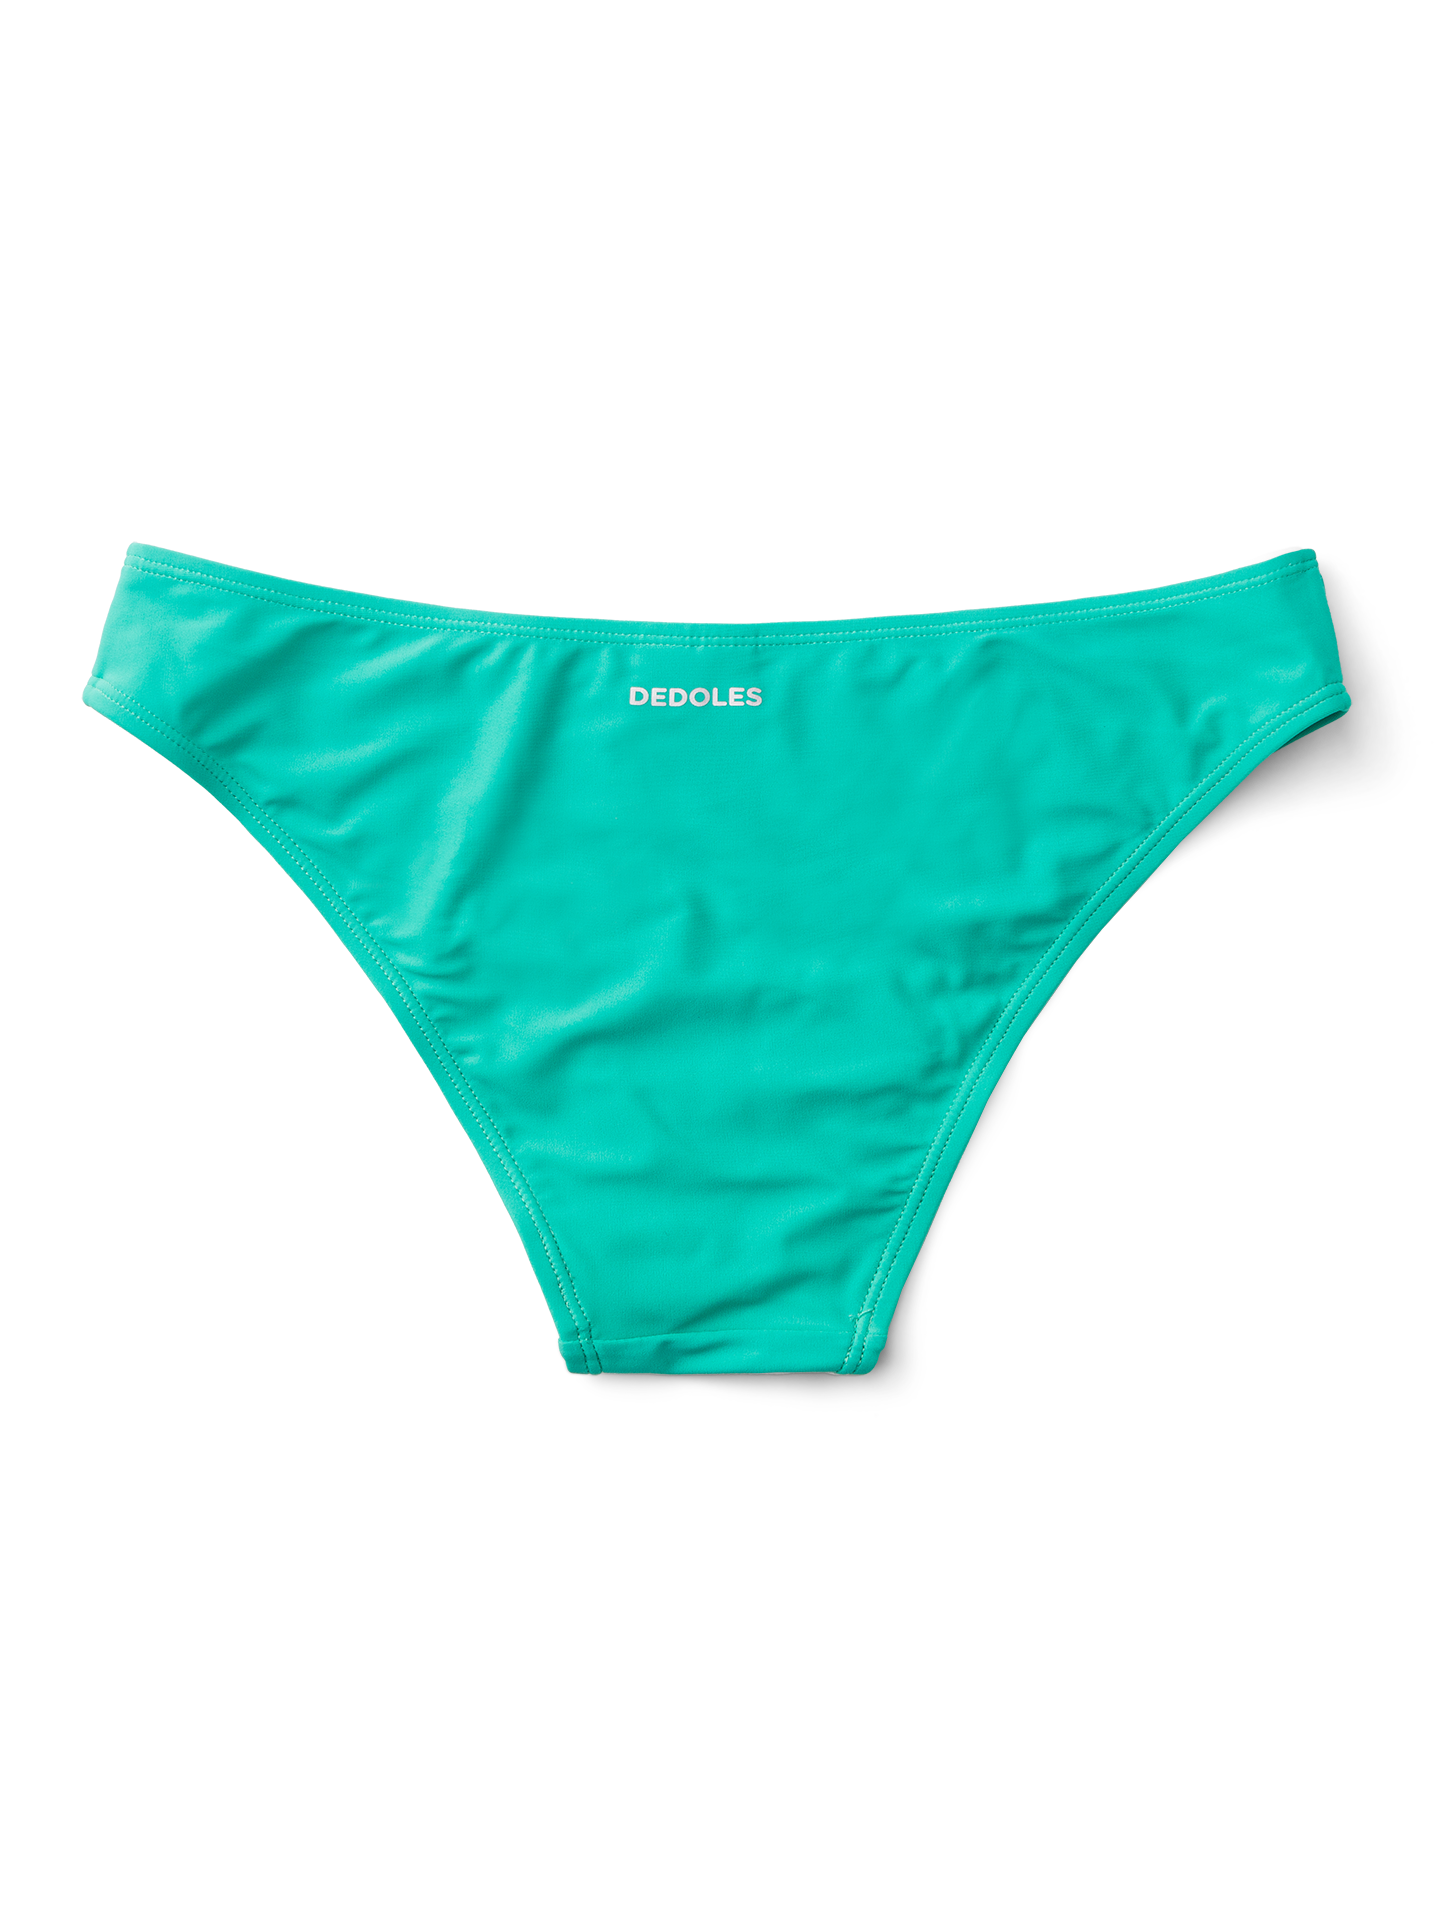 Aquamarine Green Bikini Briefs